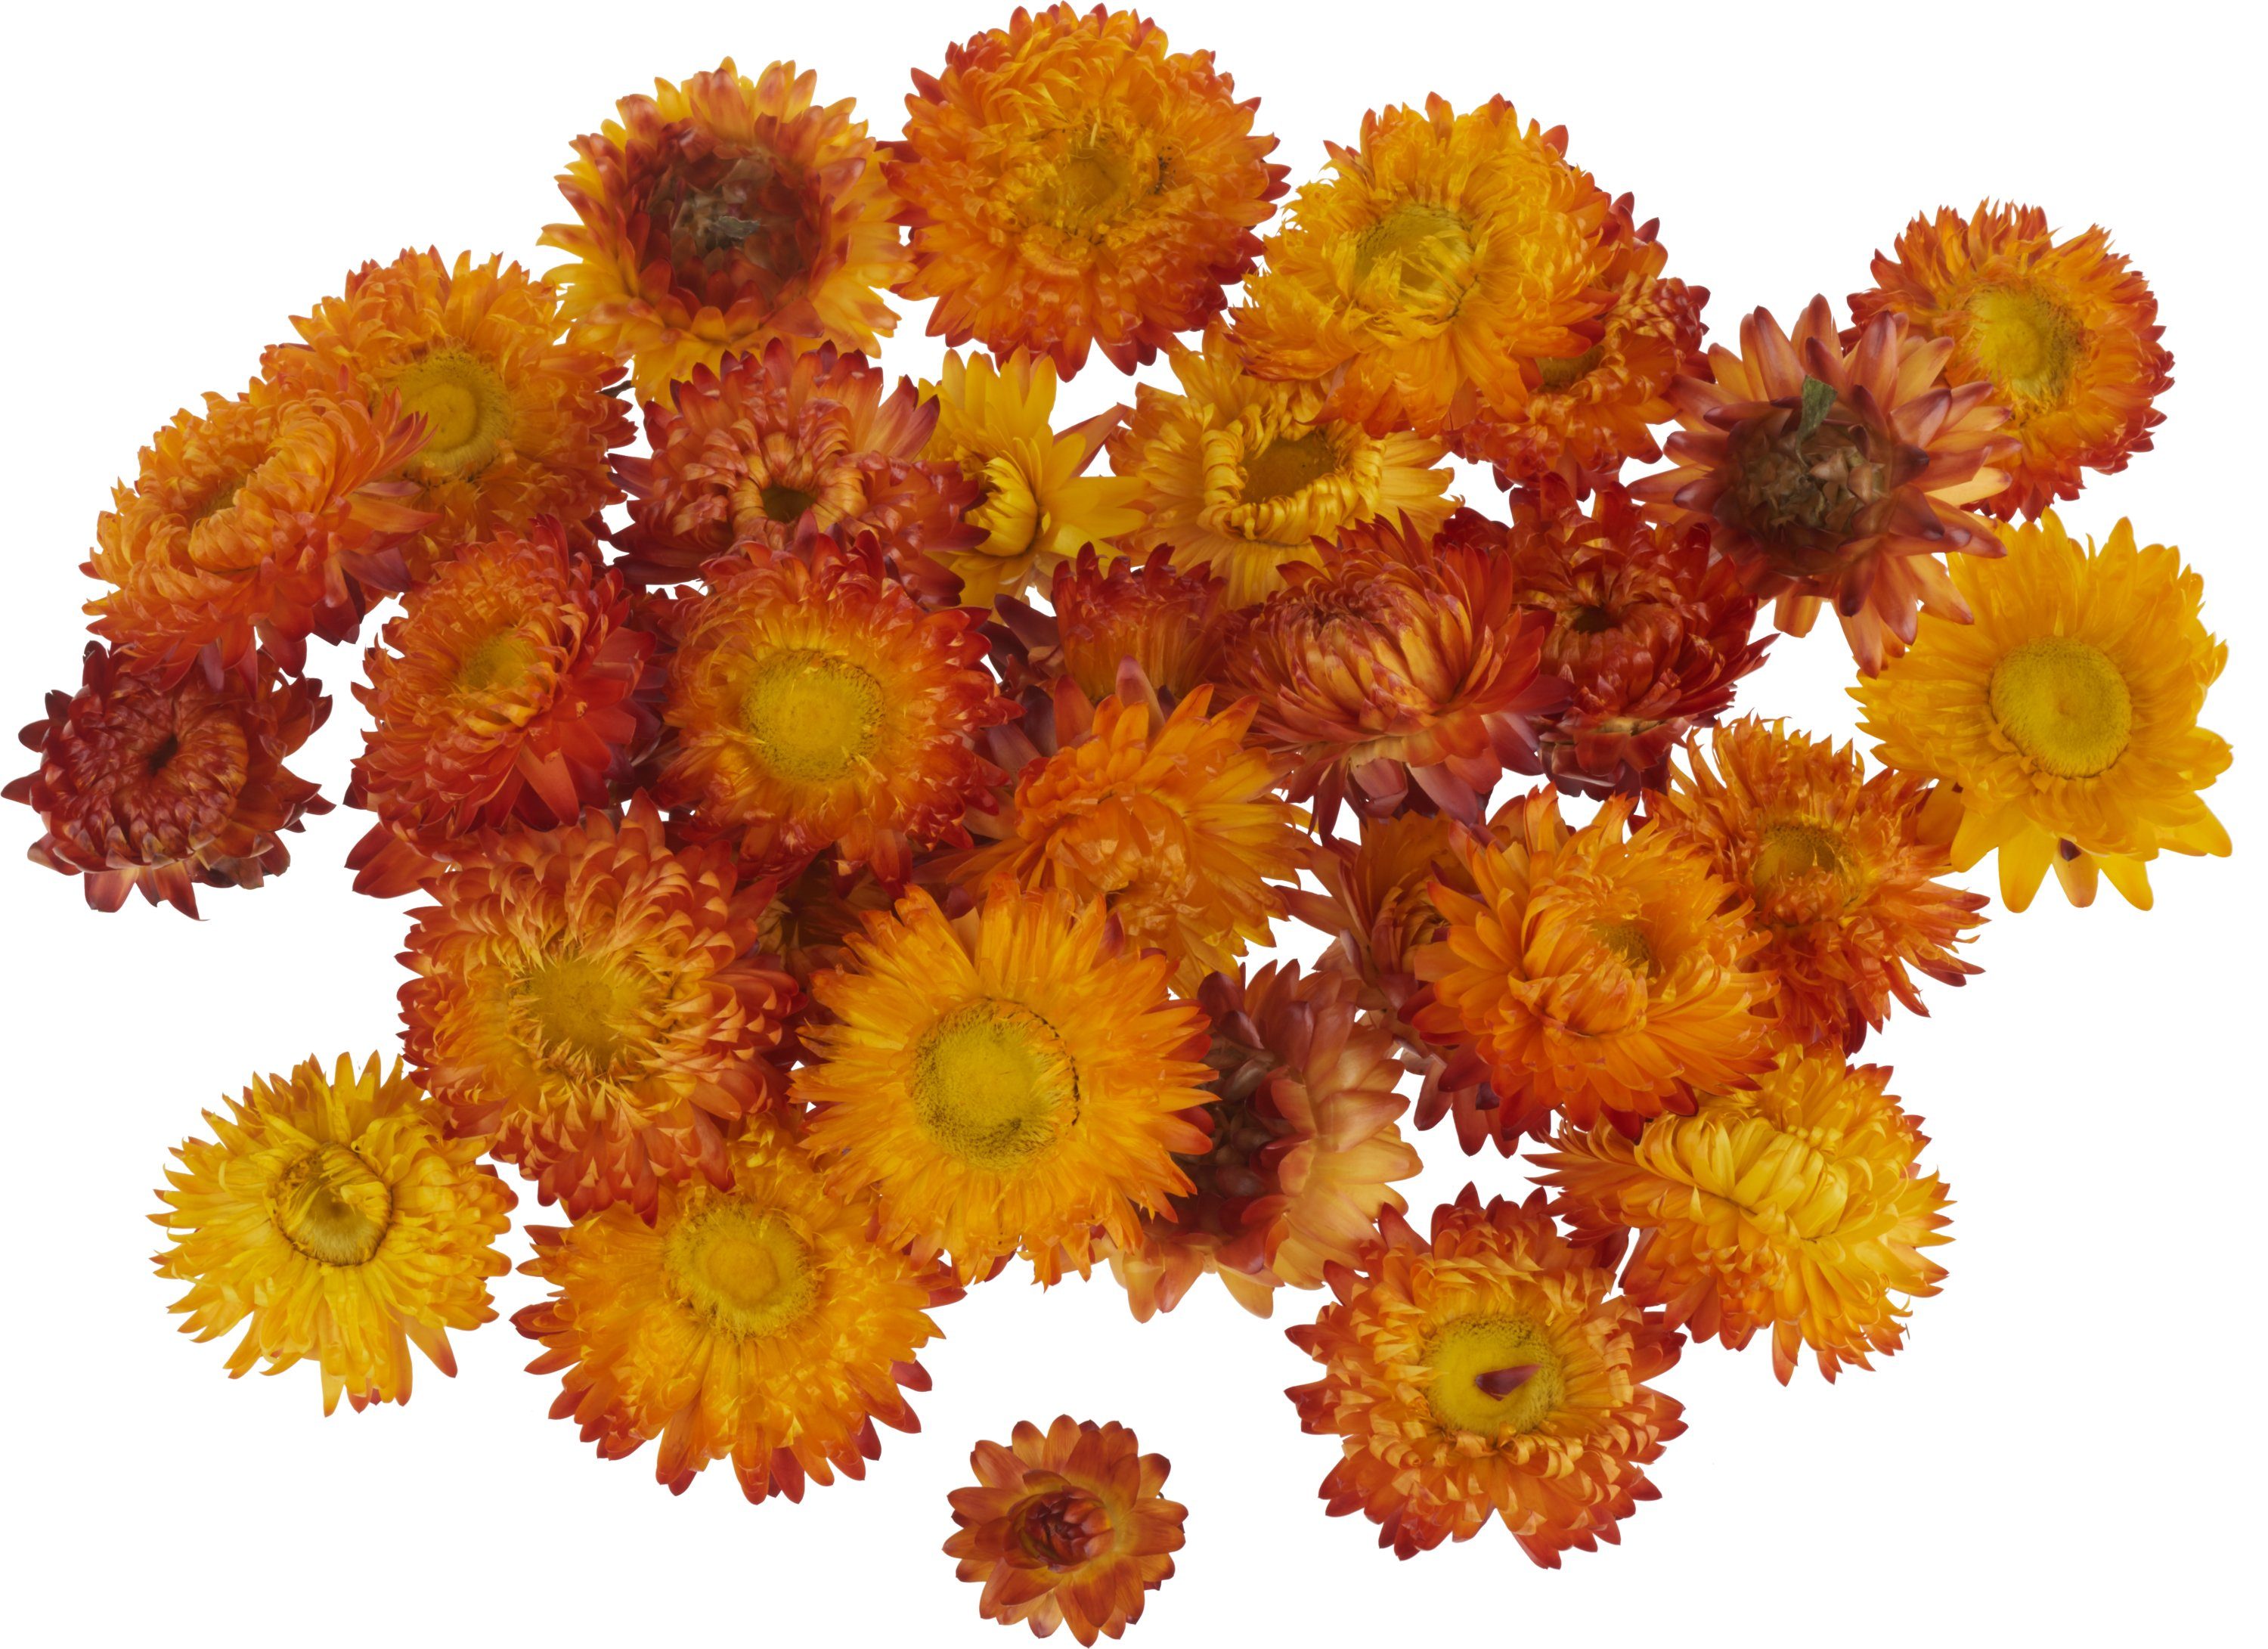 30 in - Orange Box, Kunstpflanze Strohblumenköpfe VBS, 20 g